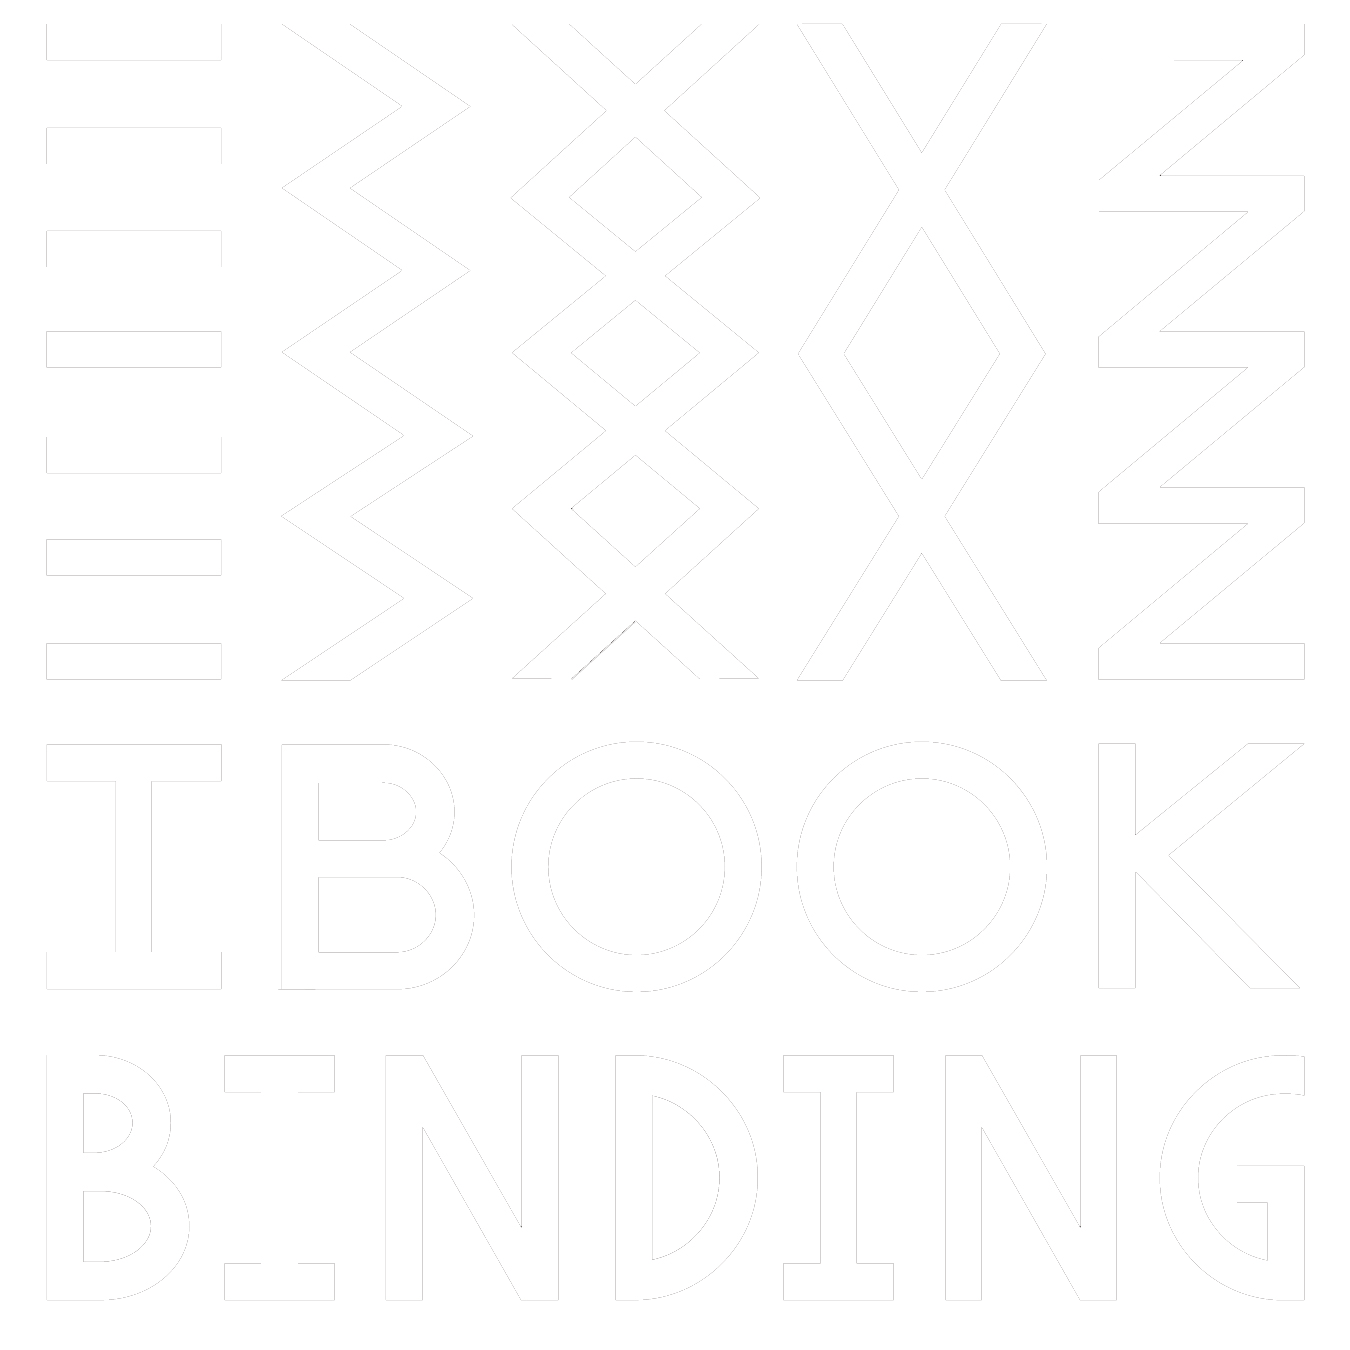 Nipping Press / Book Binding Press » Art Equipment